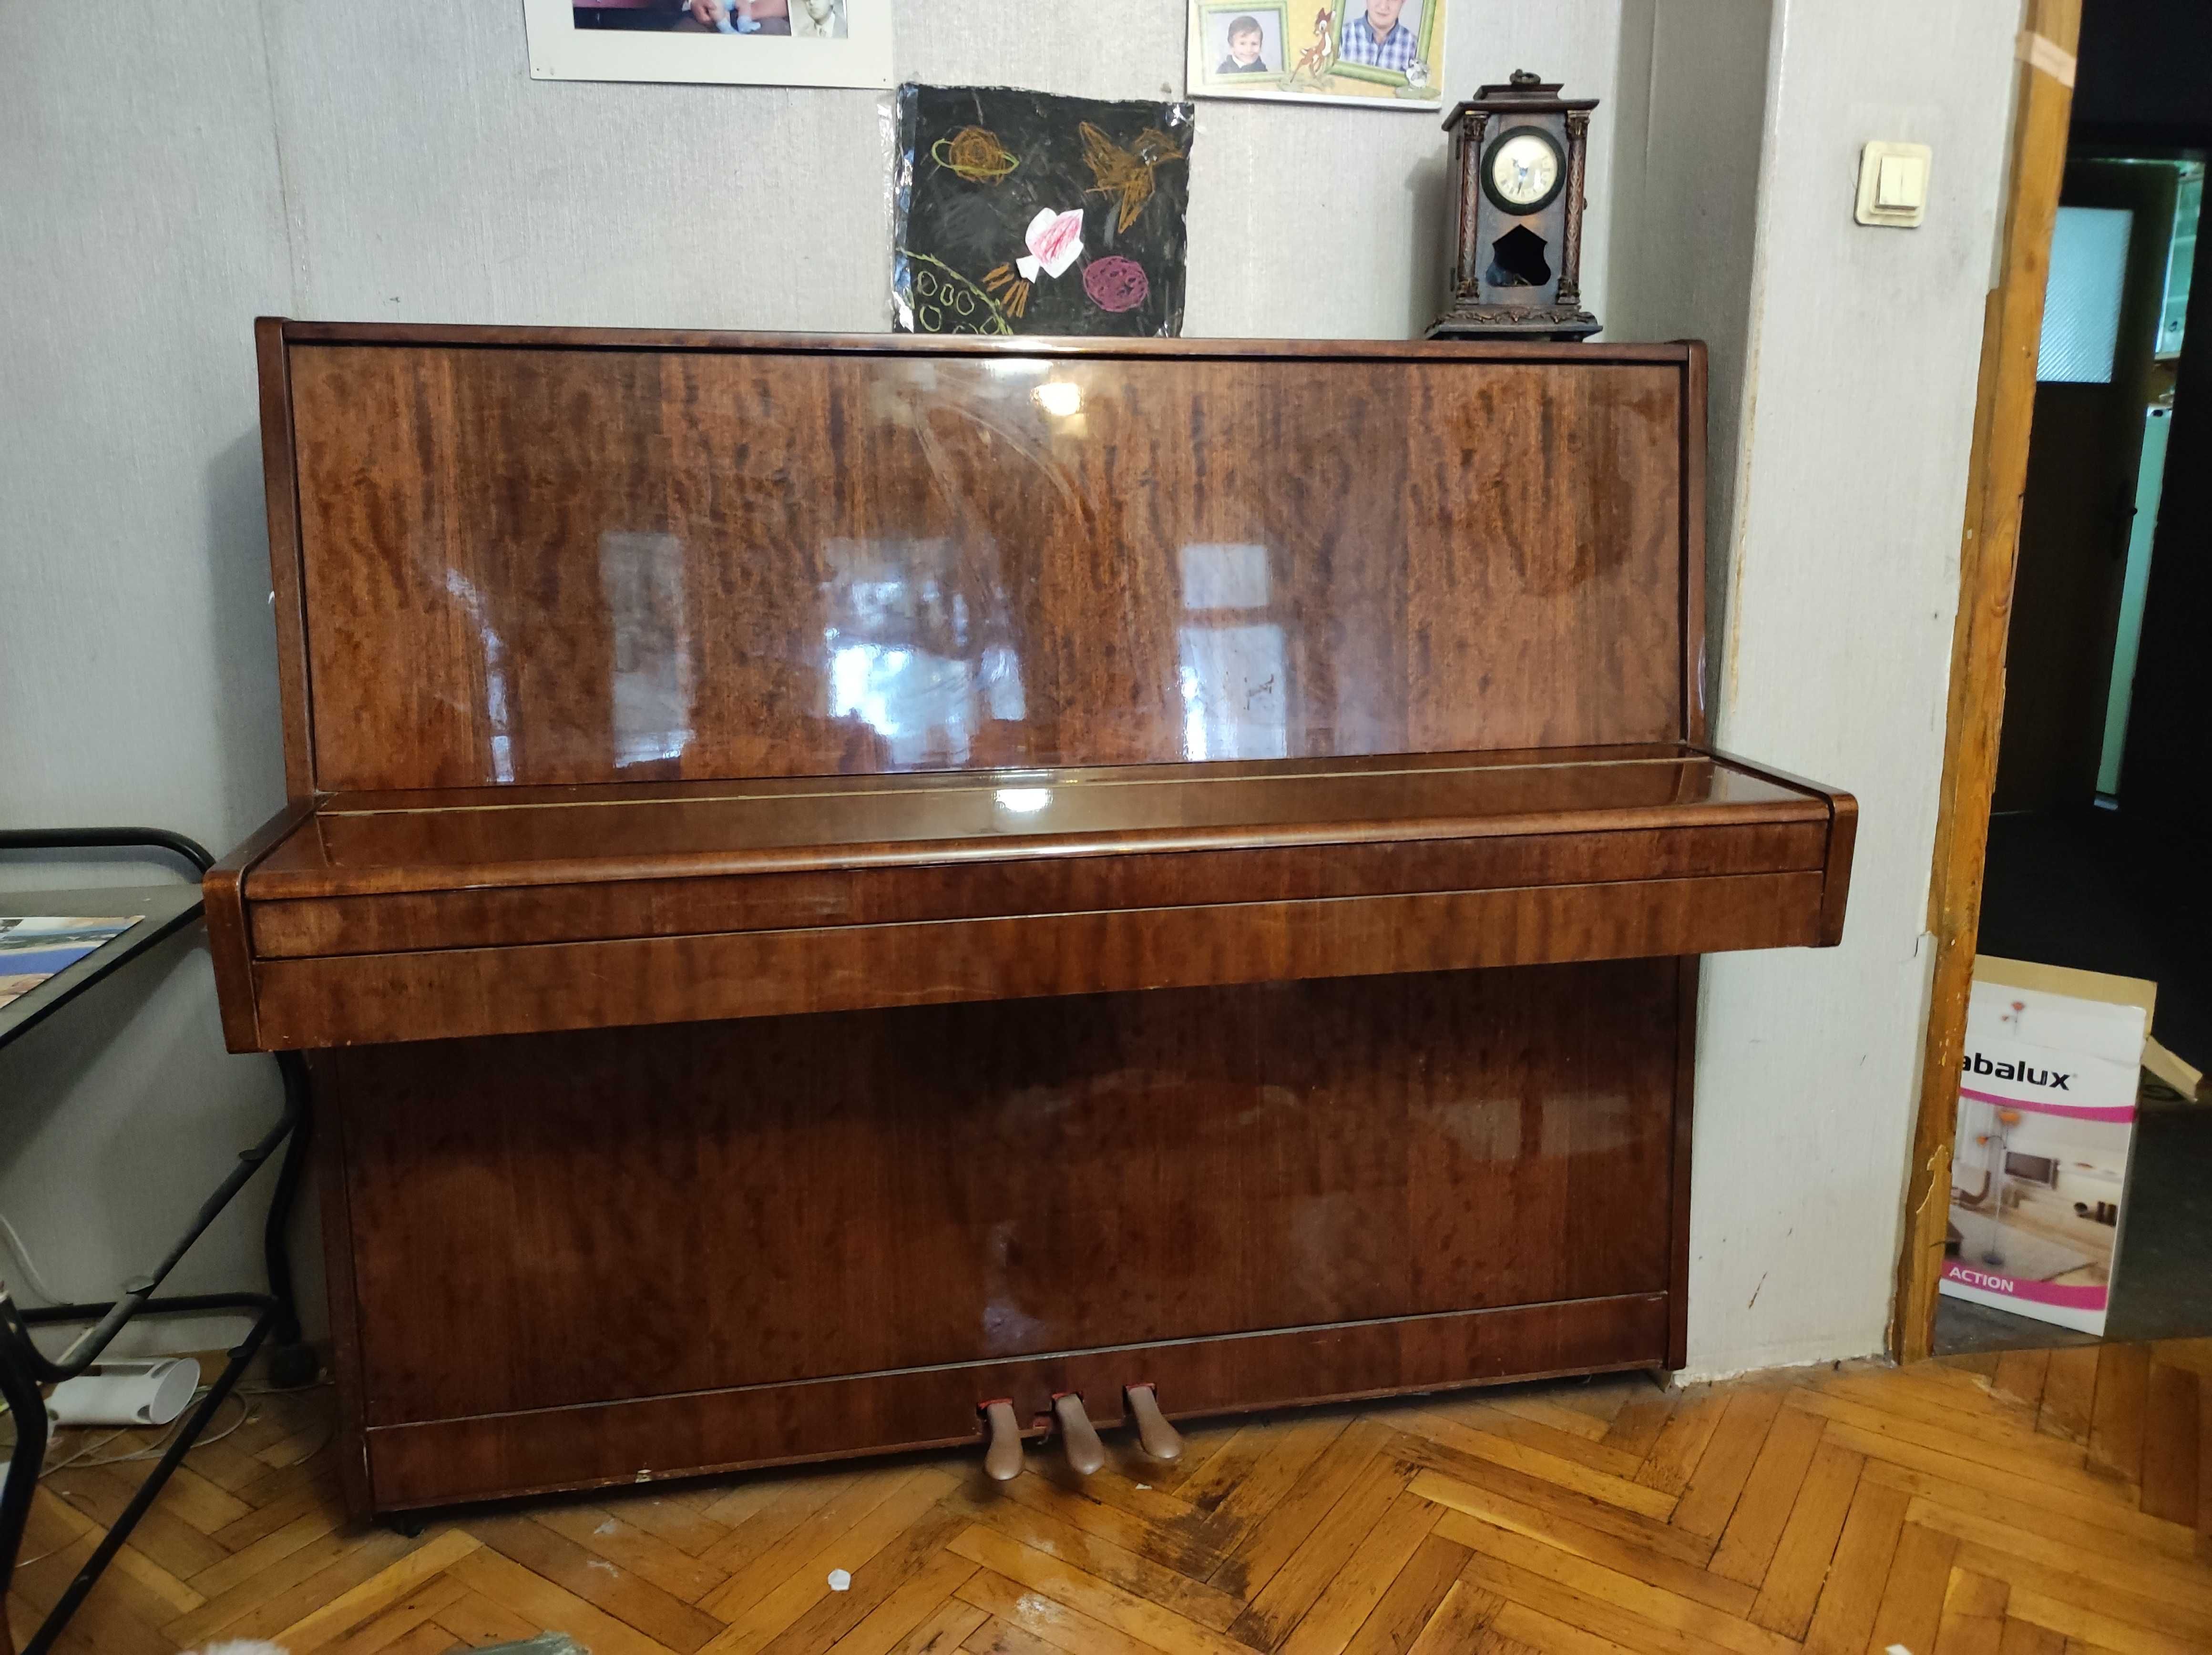 Продавам пиано "Беларус"